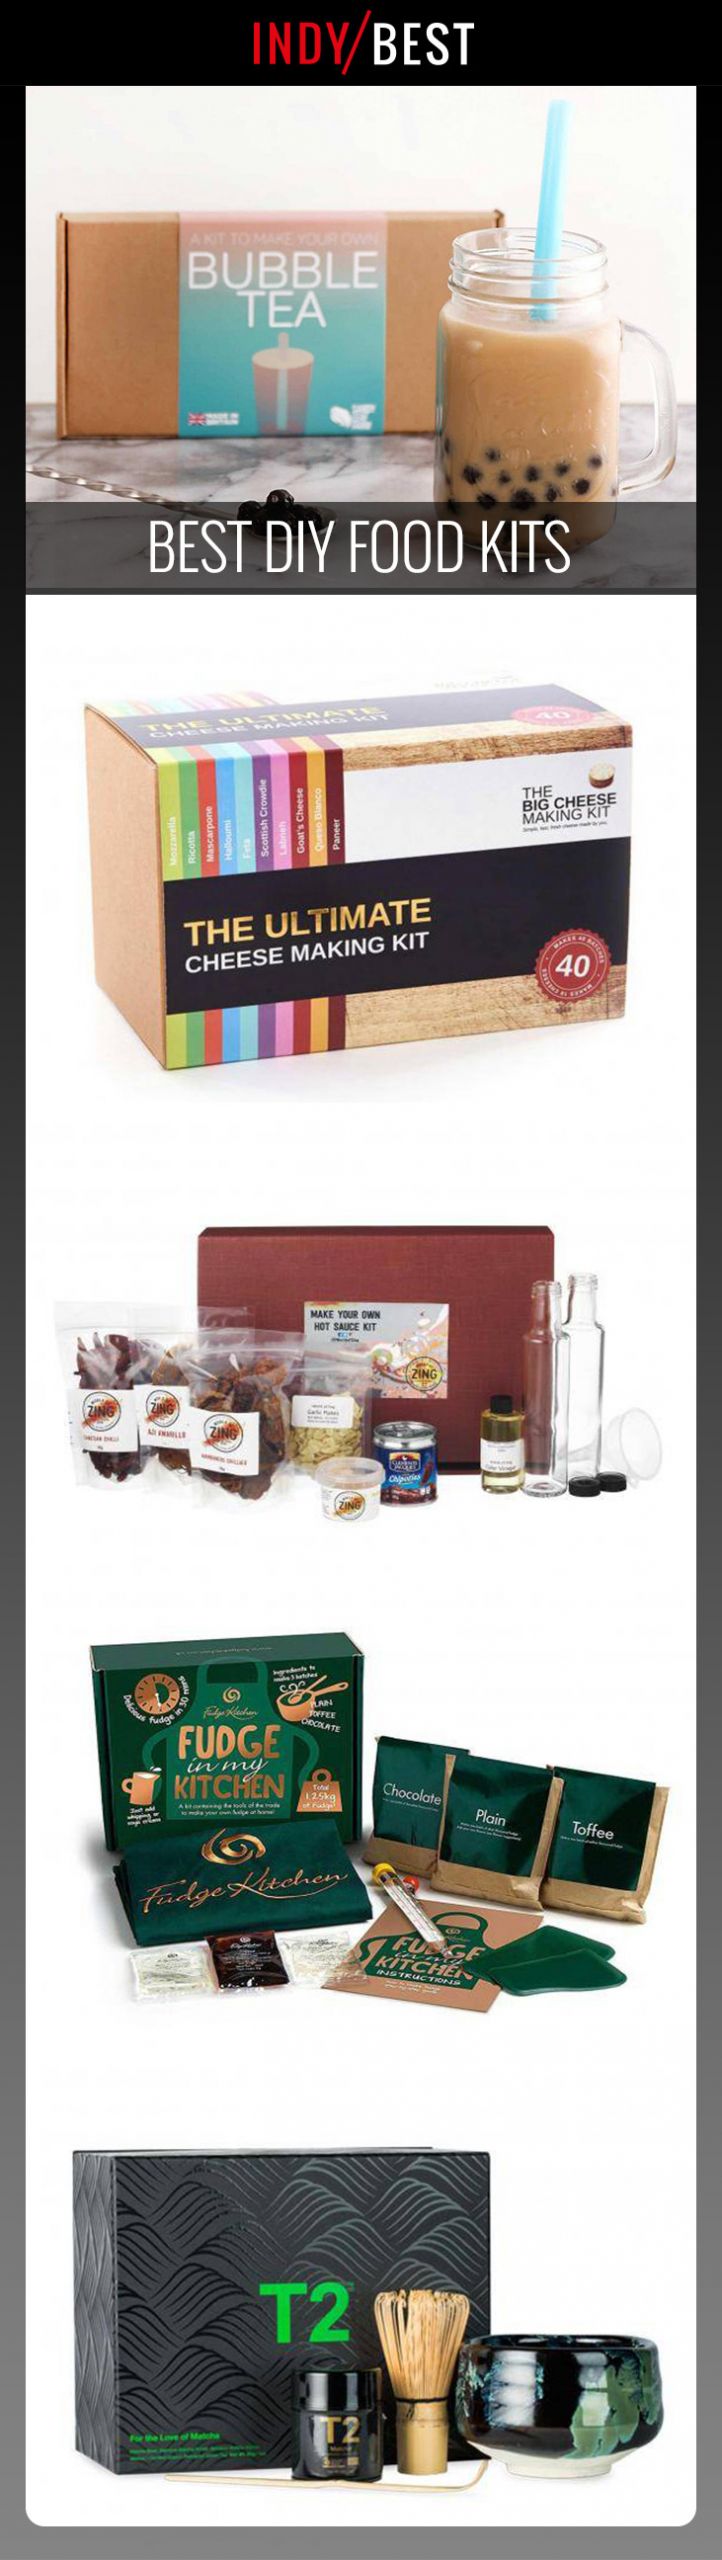 DIY Food Kits
 13 best DIY food kits